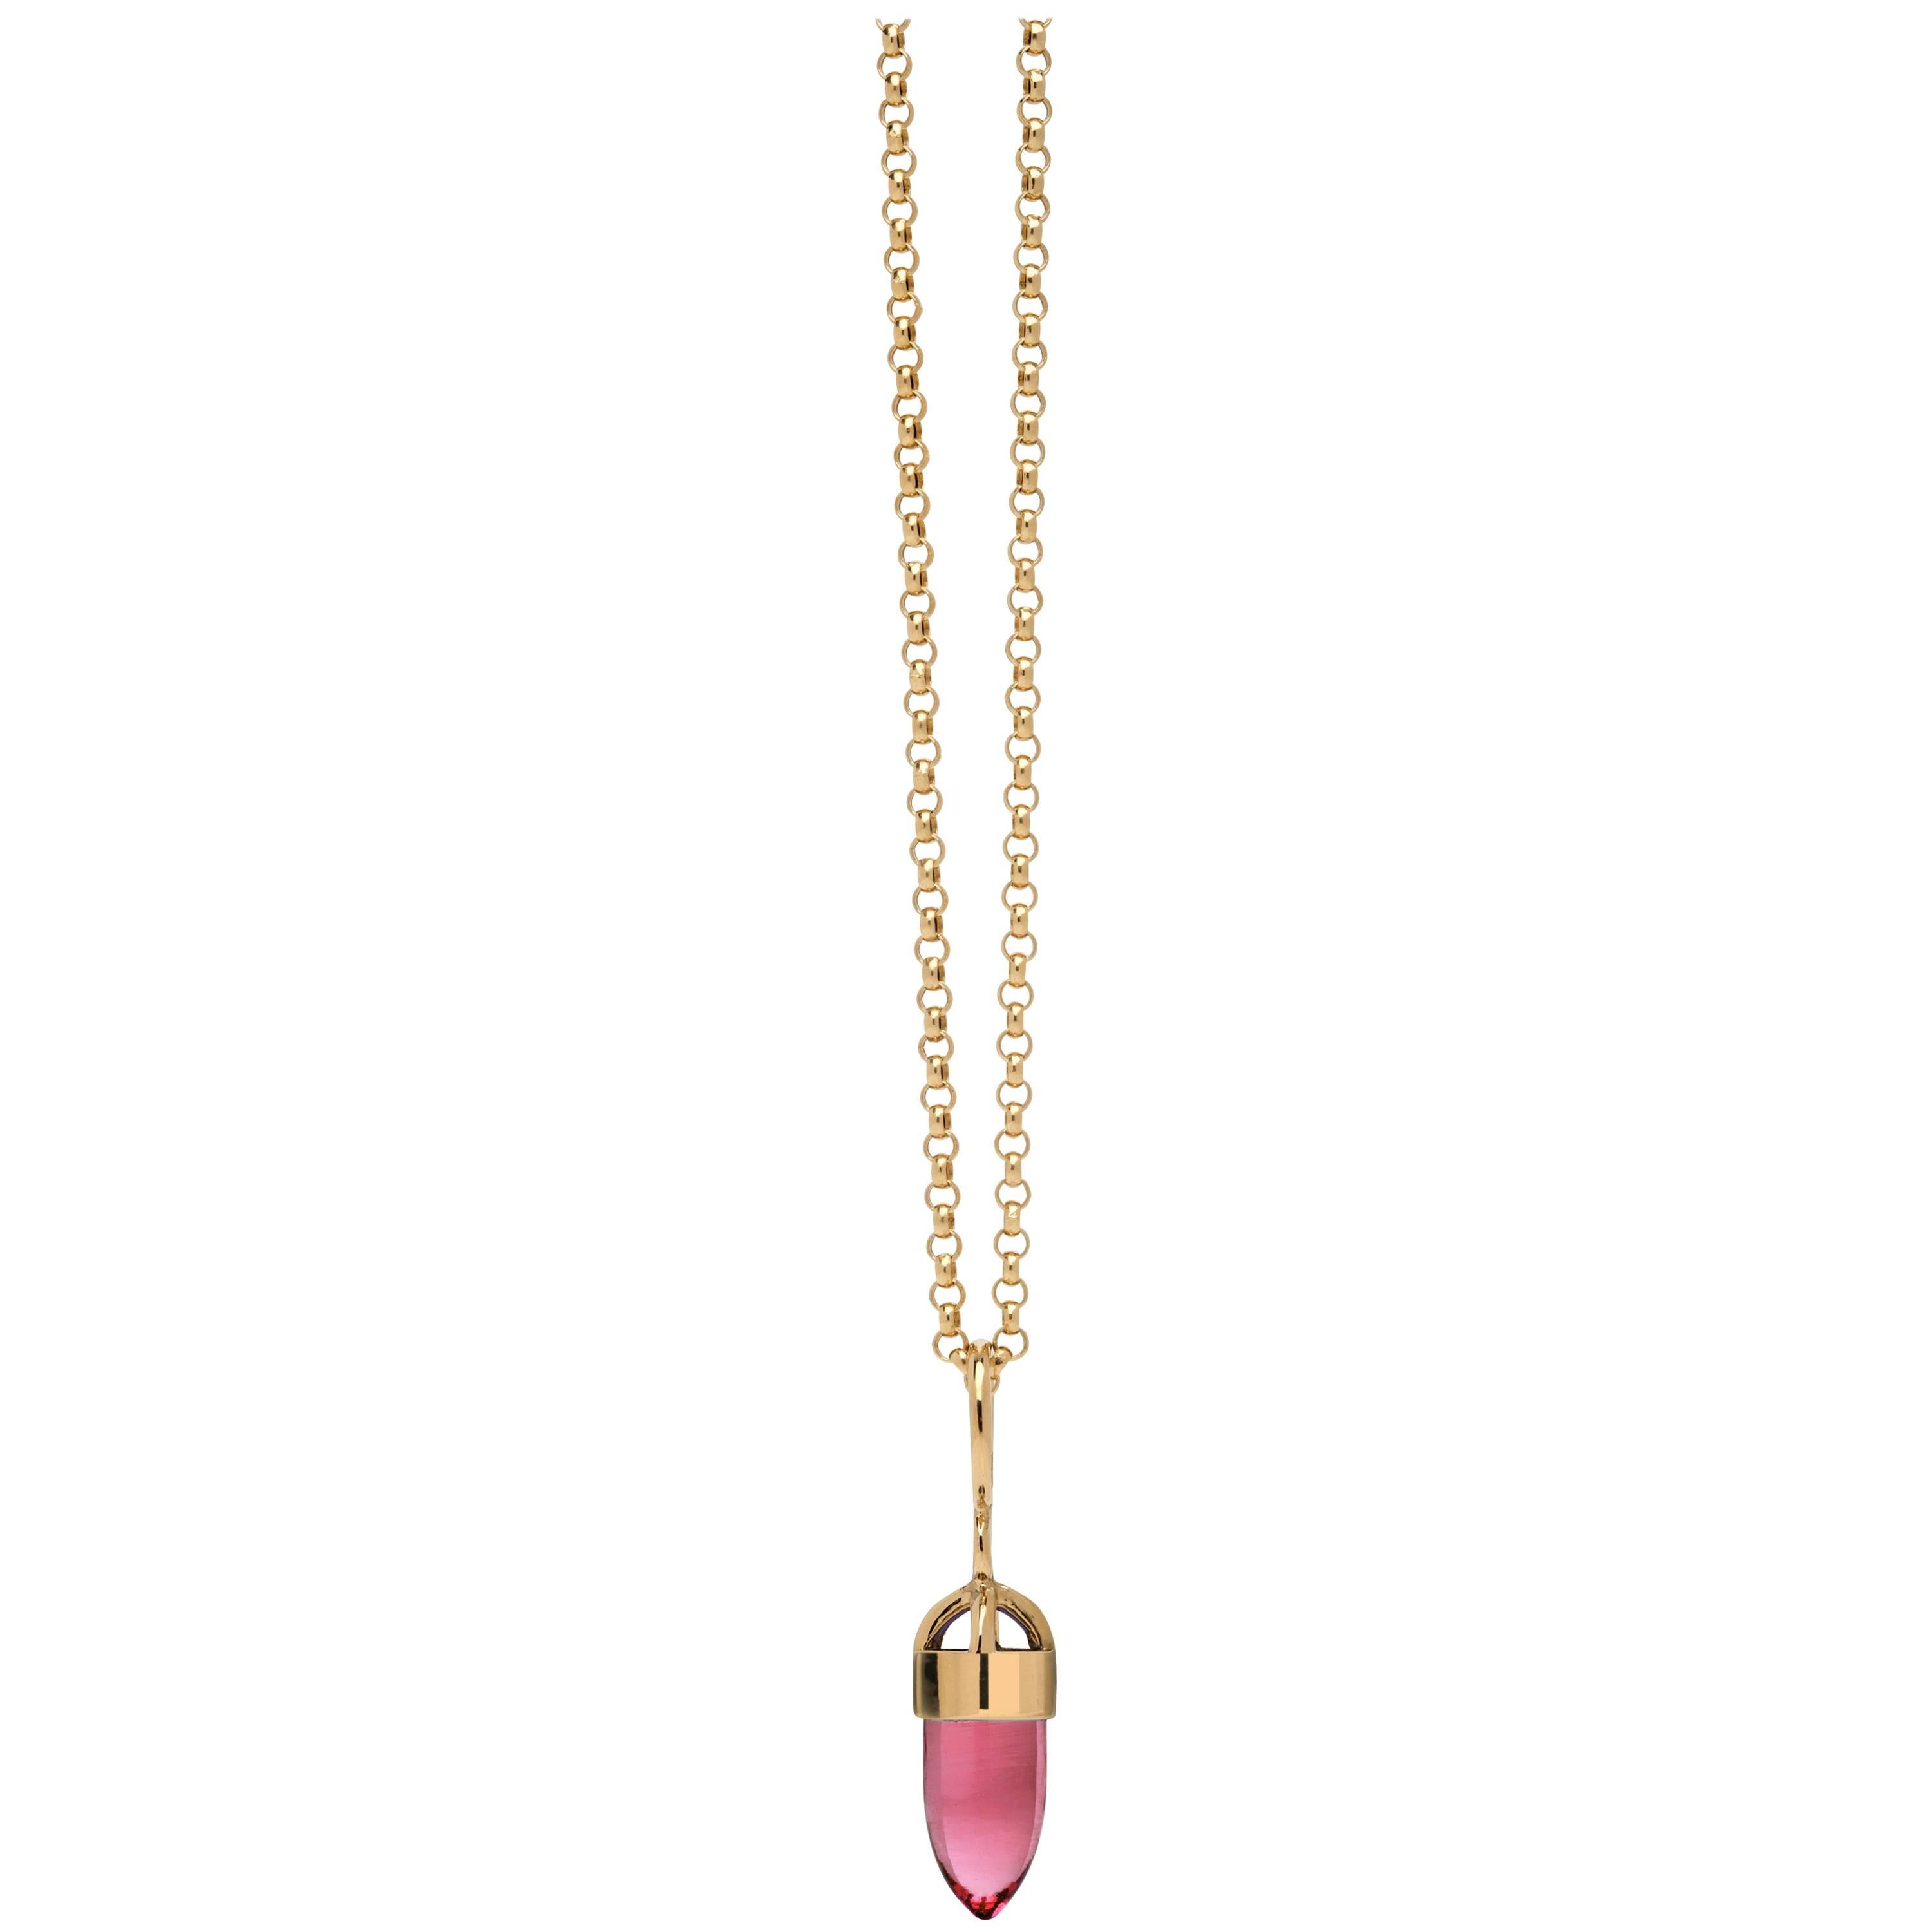 Collier pendentif MAVIADA moderne minimaliste en or jaune 18 carats avec pierres roses